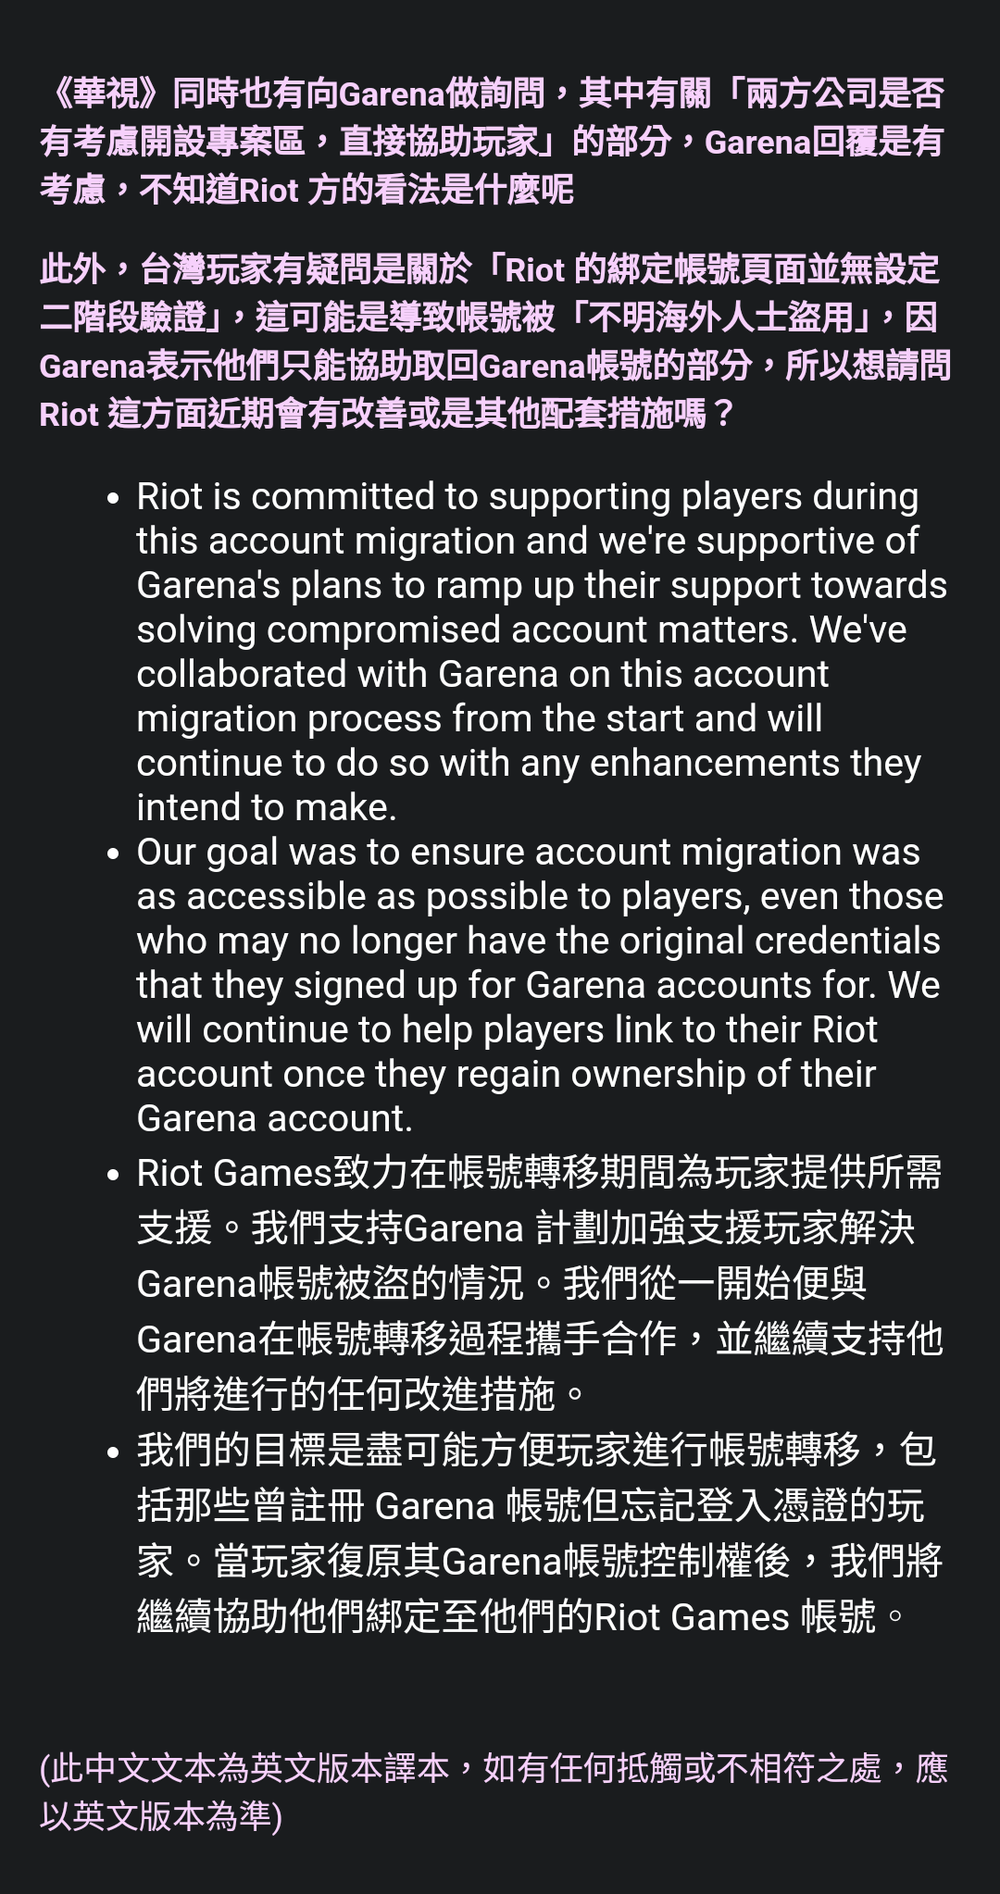 Riot Games 回應華視